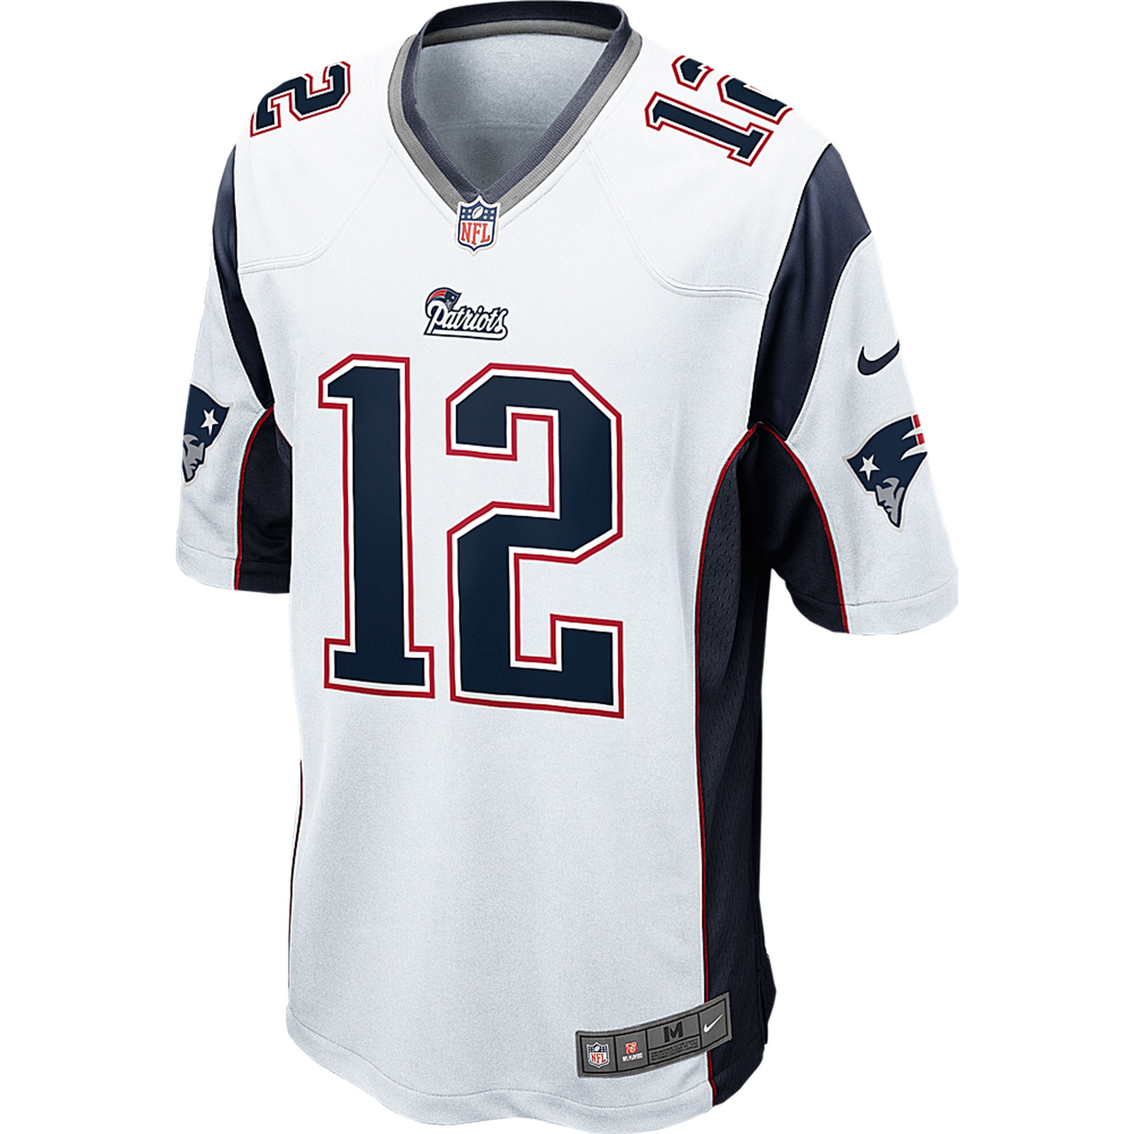 Nike Nfl New England Patriots Men's Tom Brady Game Jersey | Nfl ...